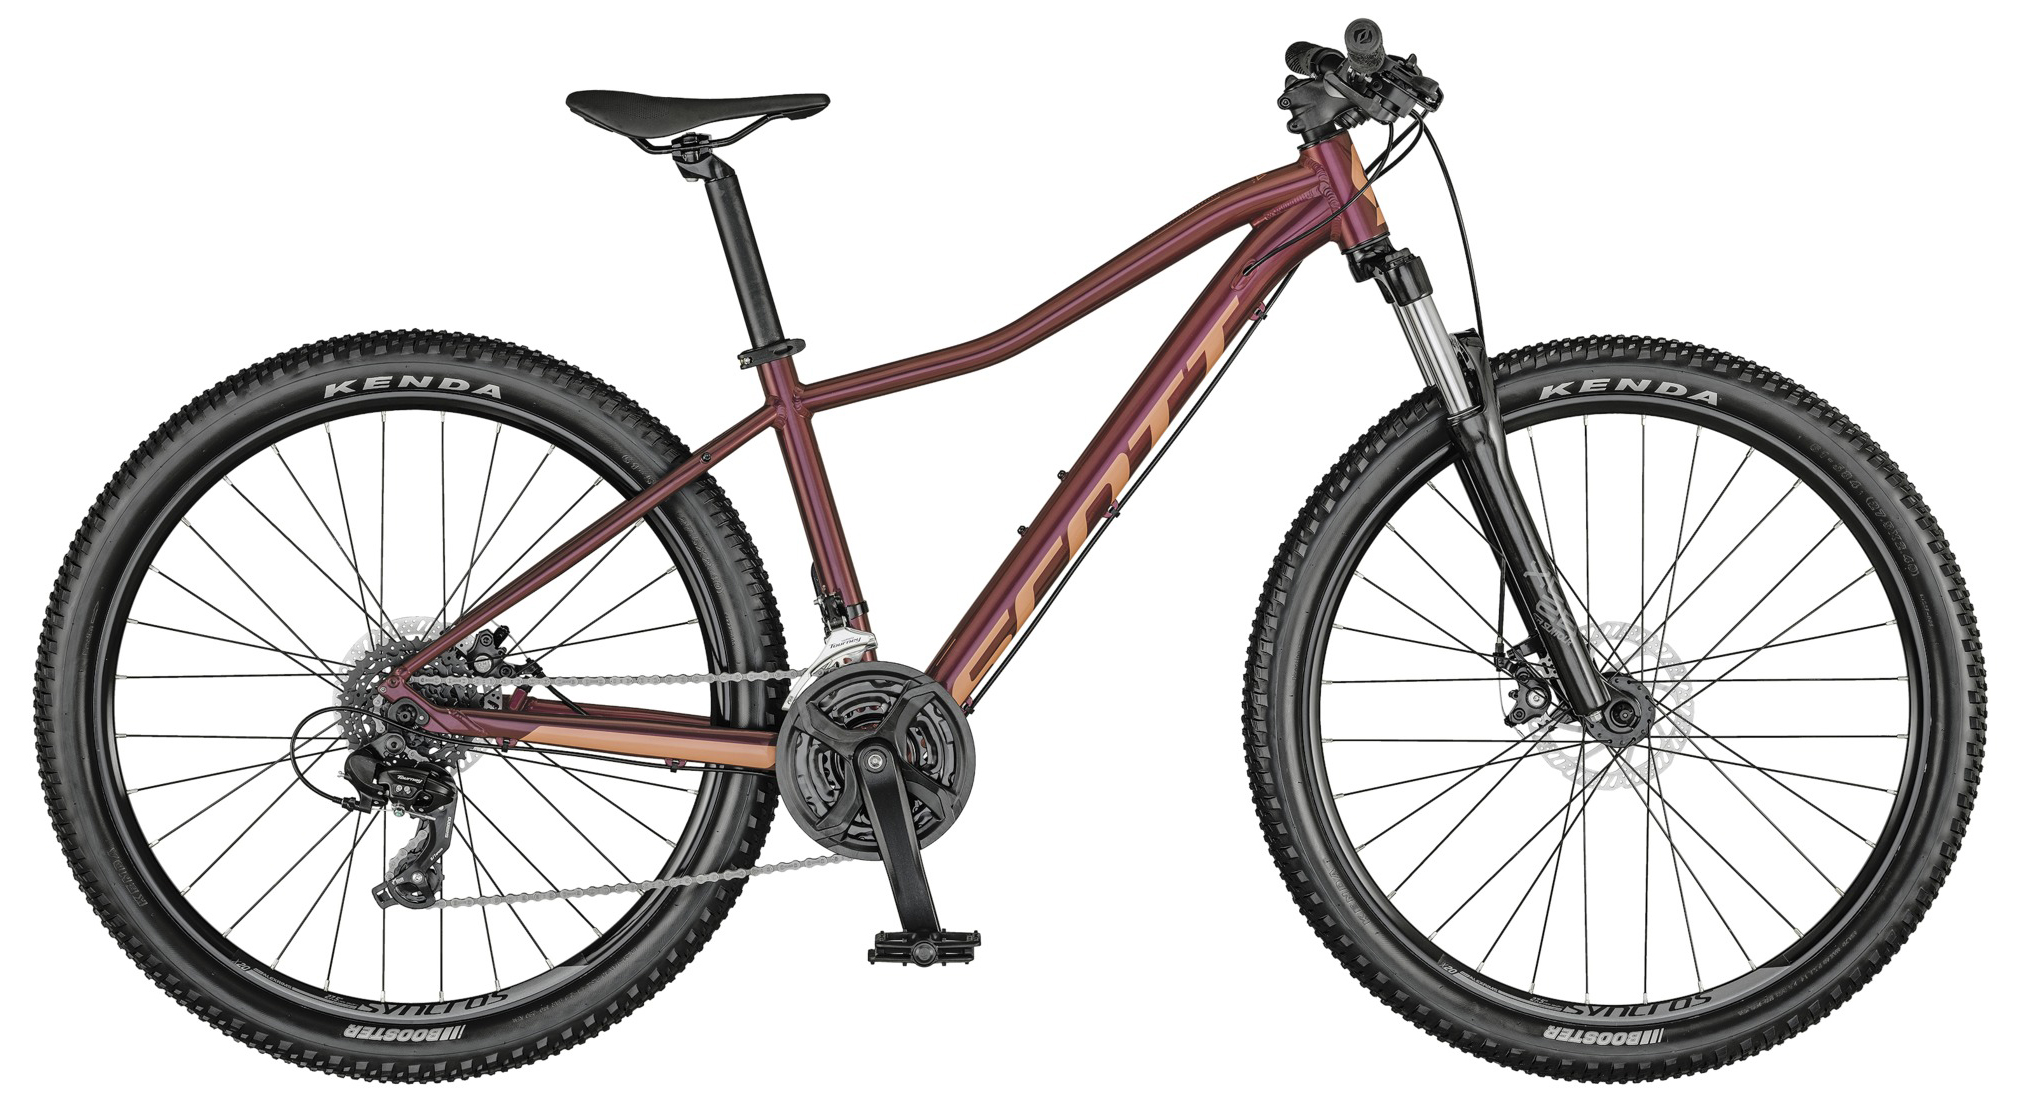  Отзывы о Женском велосипеде Scott Contessa Active 60 29 (2021) 2021